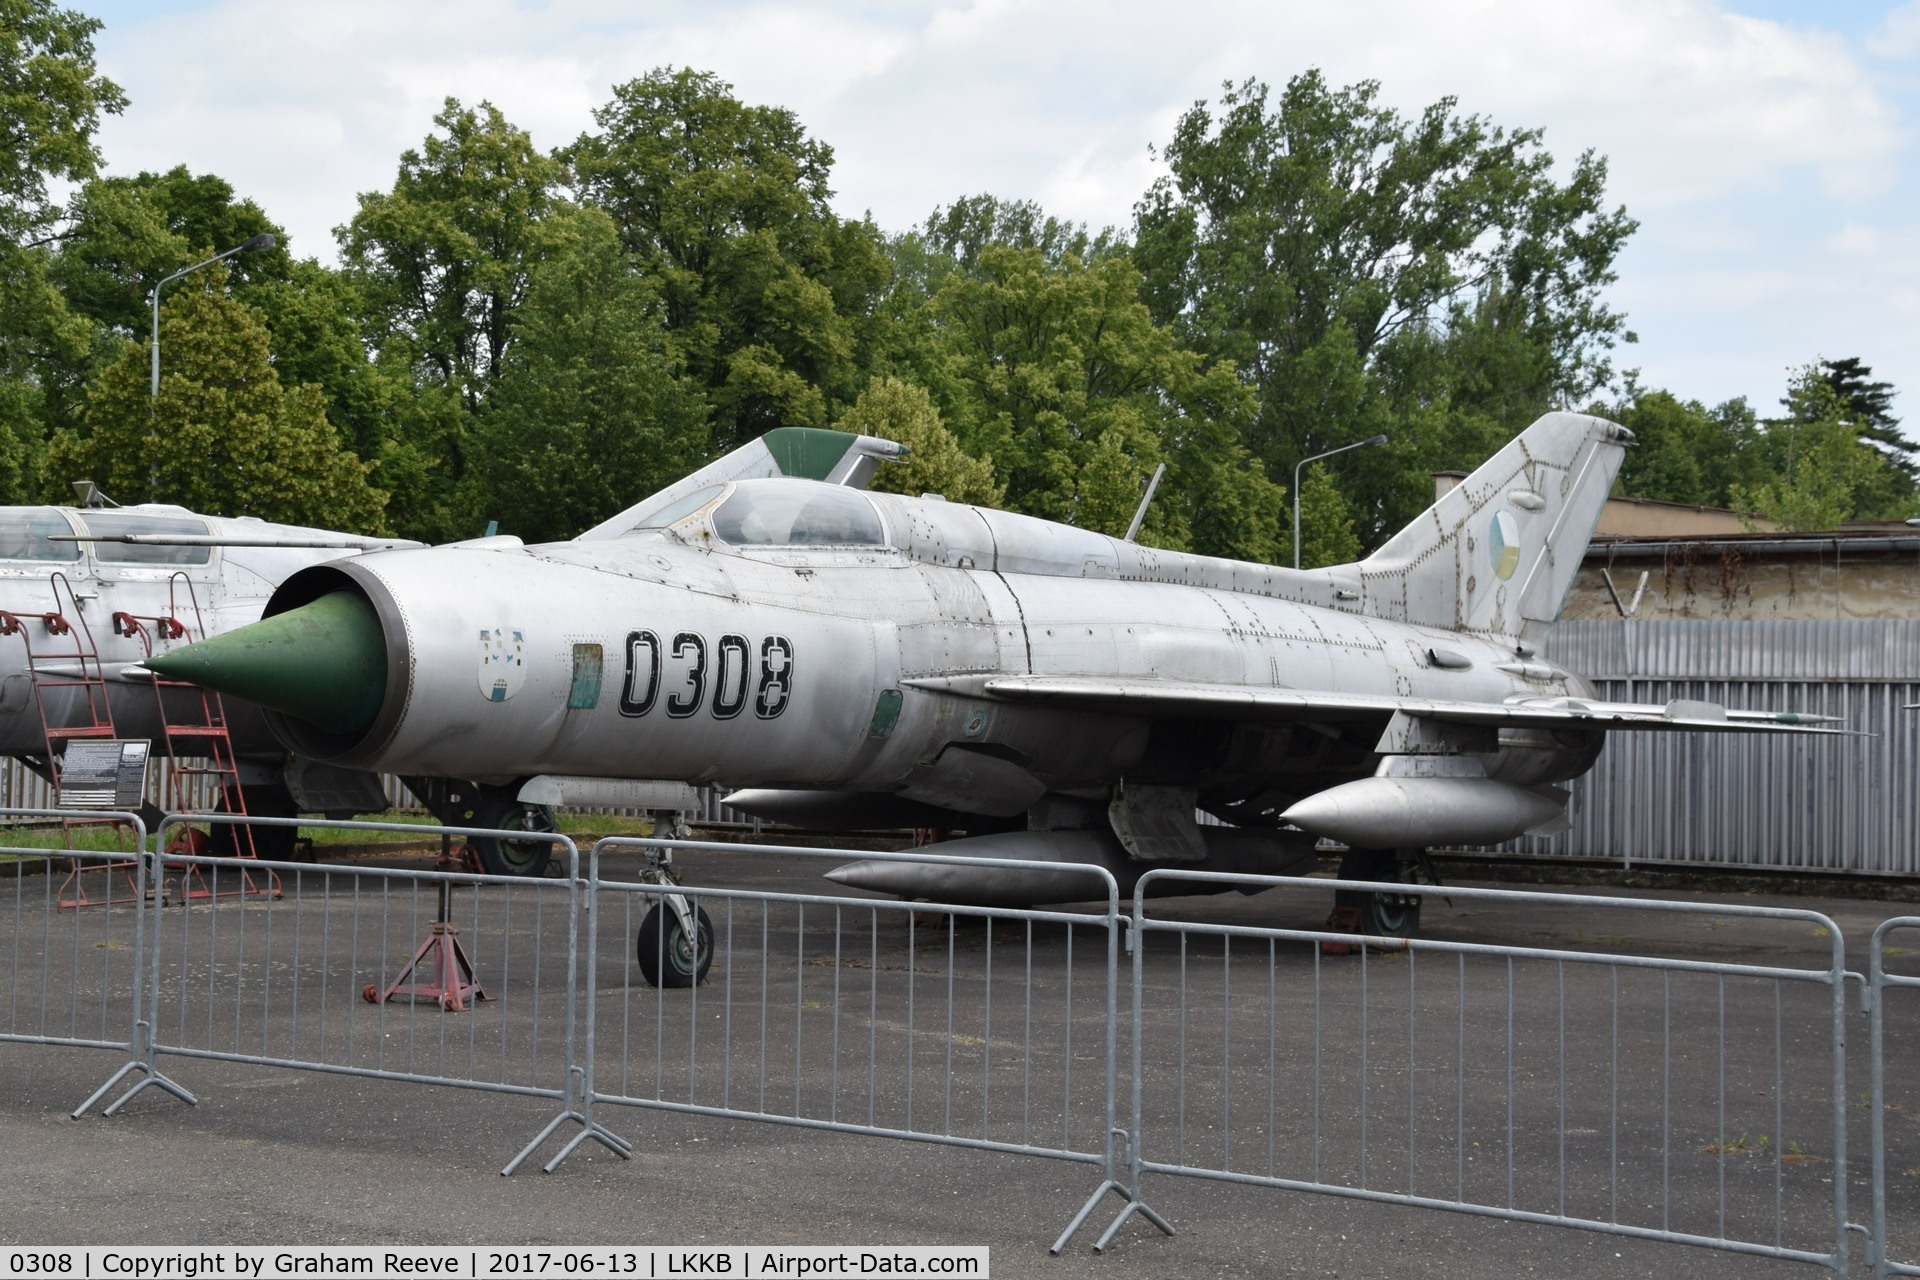 0308, 1964 Mikoyan-Gurevich MiG-21PF C/N 560308, Displayed at the 